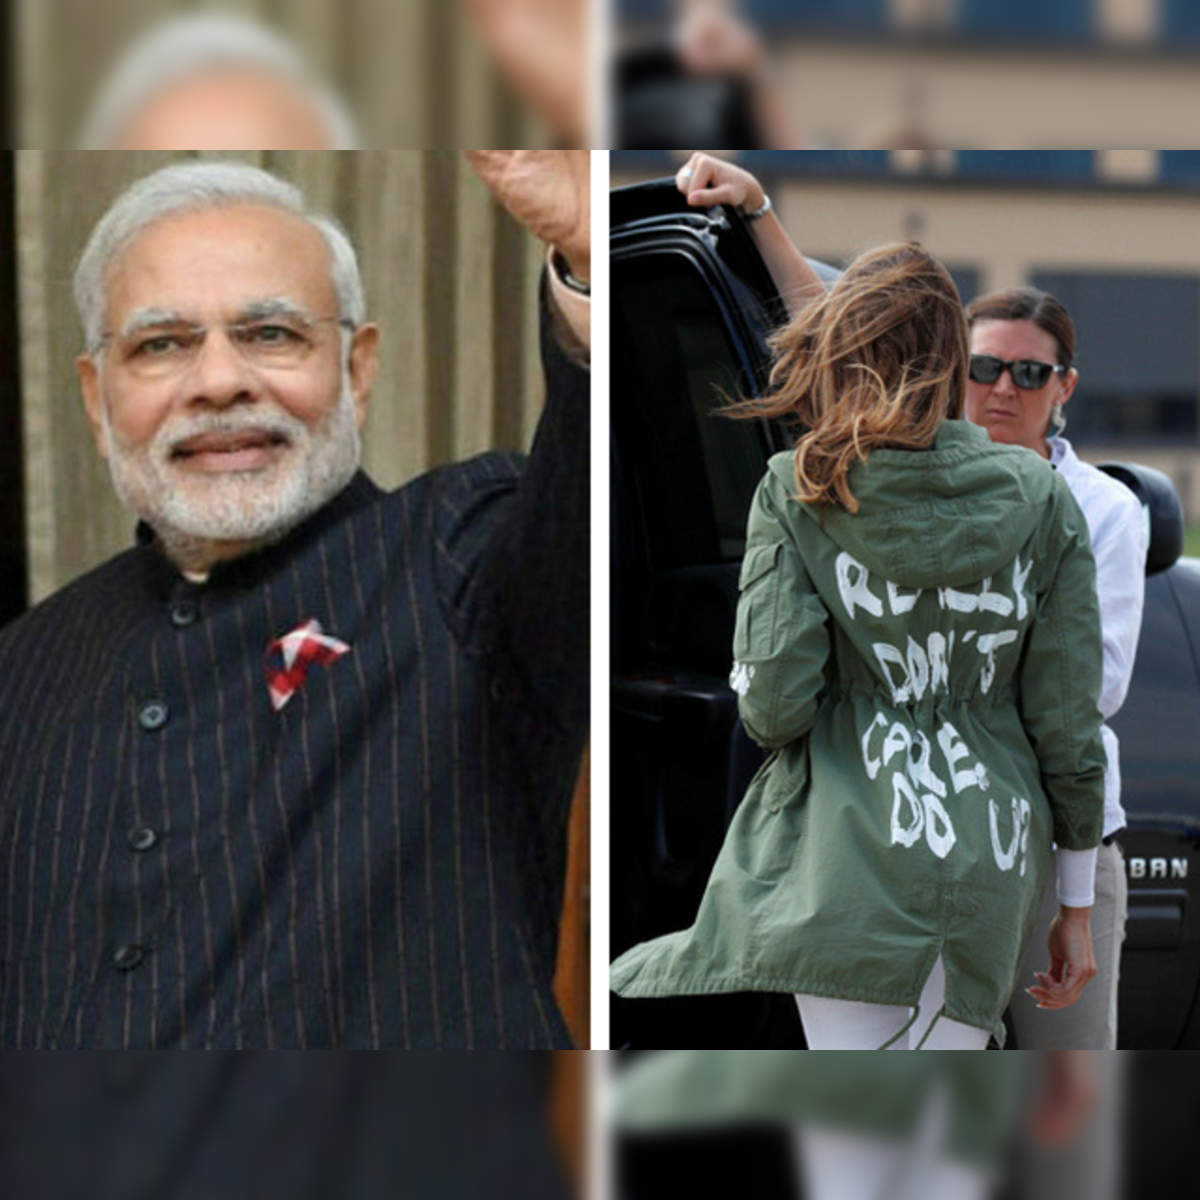 Buy ONNIX Men's Silk Kurta Pajama With Modi Jacket, nehru Jacket With Kurta  Pajama, Wedding Dress For Men, Indian Waistcoat For Men Online at Best  Prices in India - JioMart.